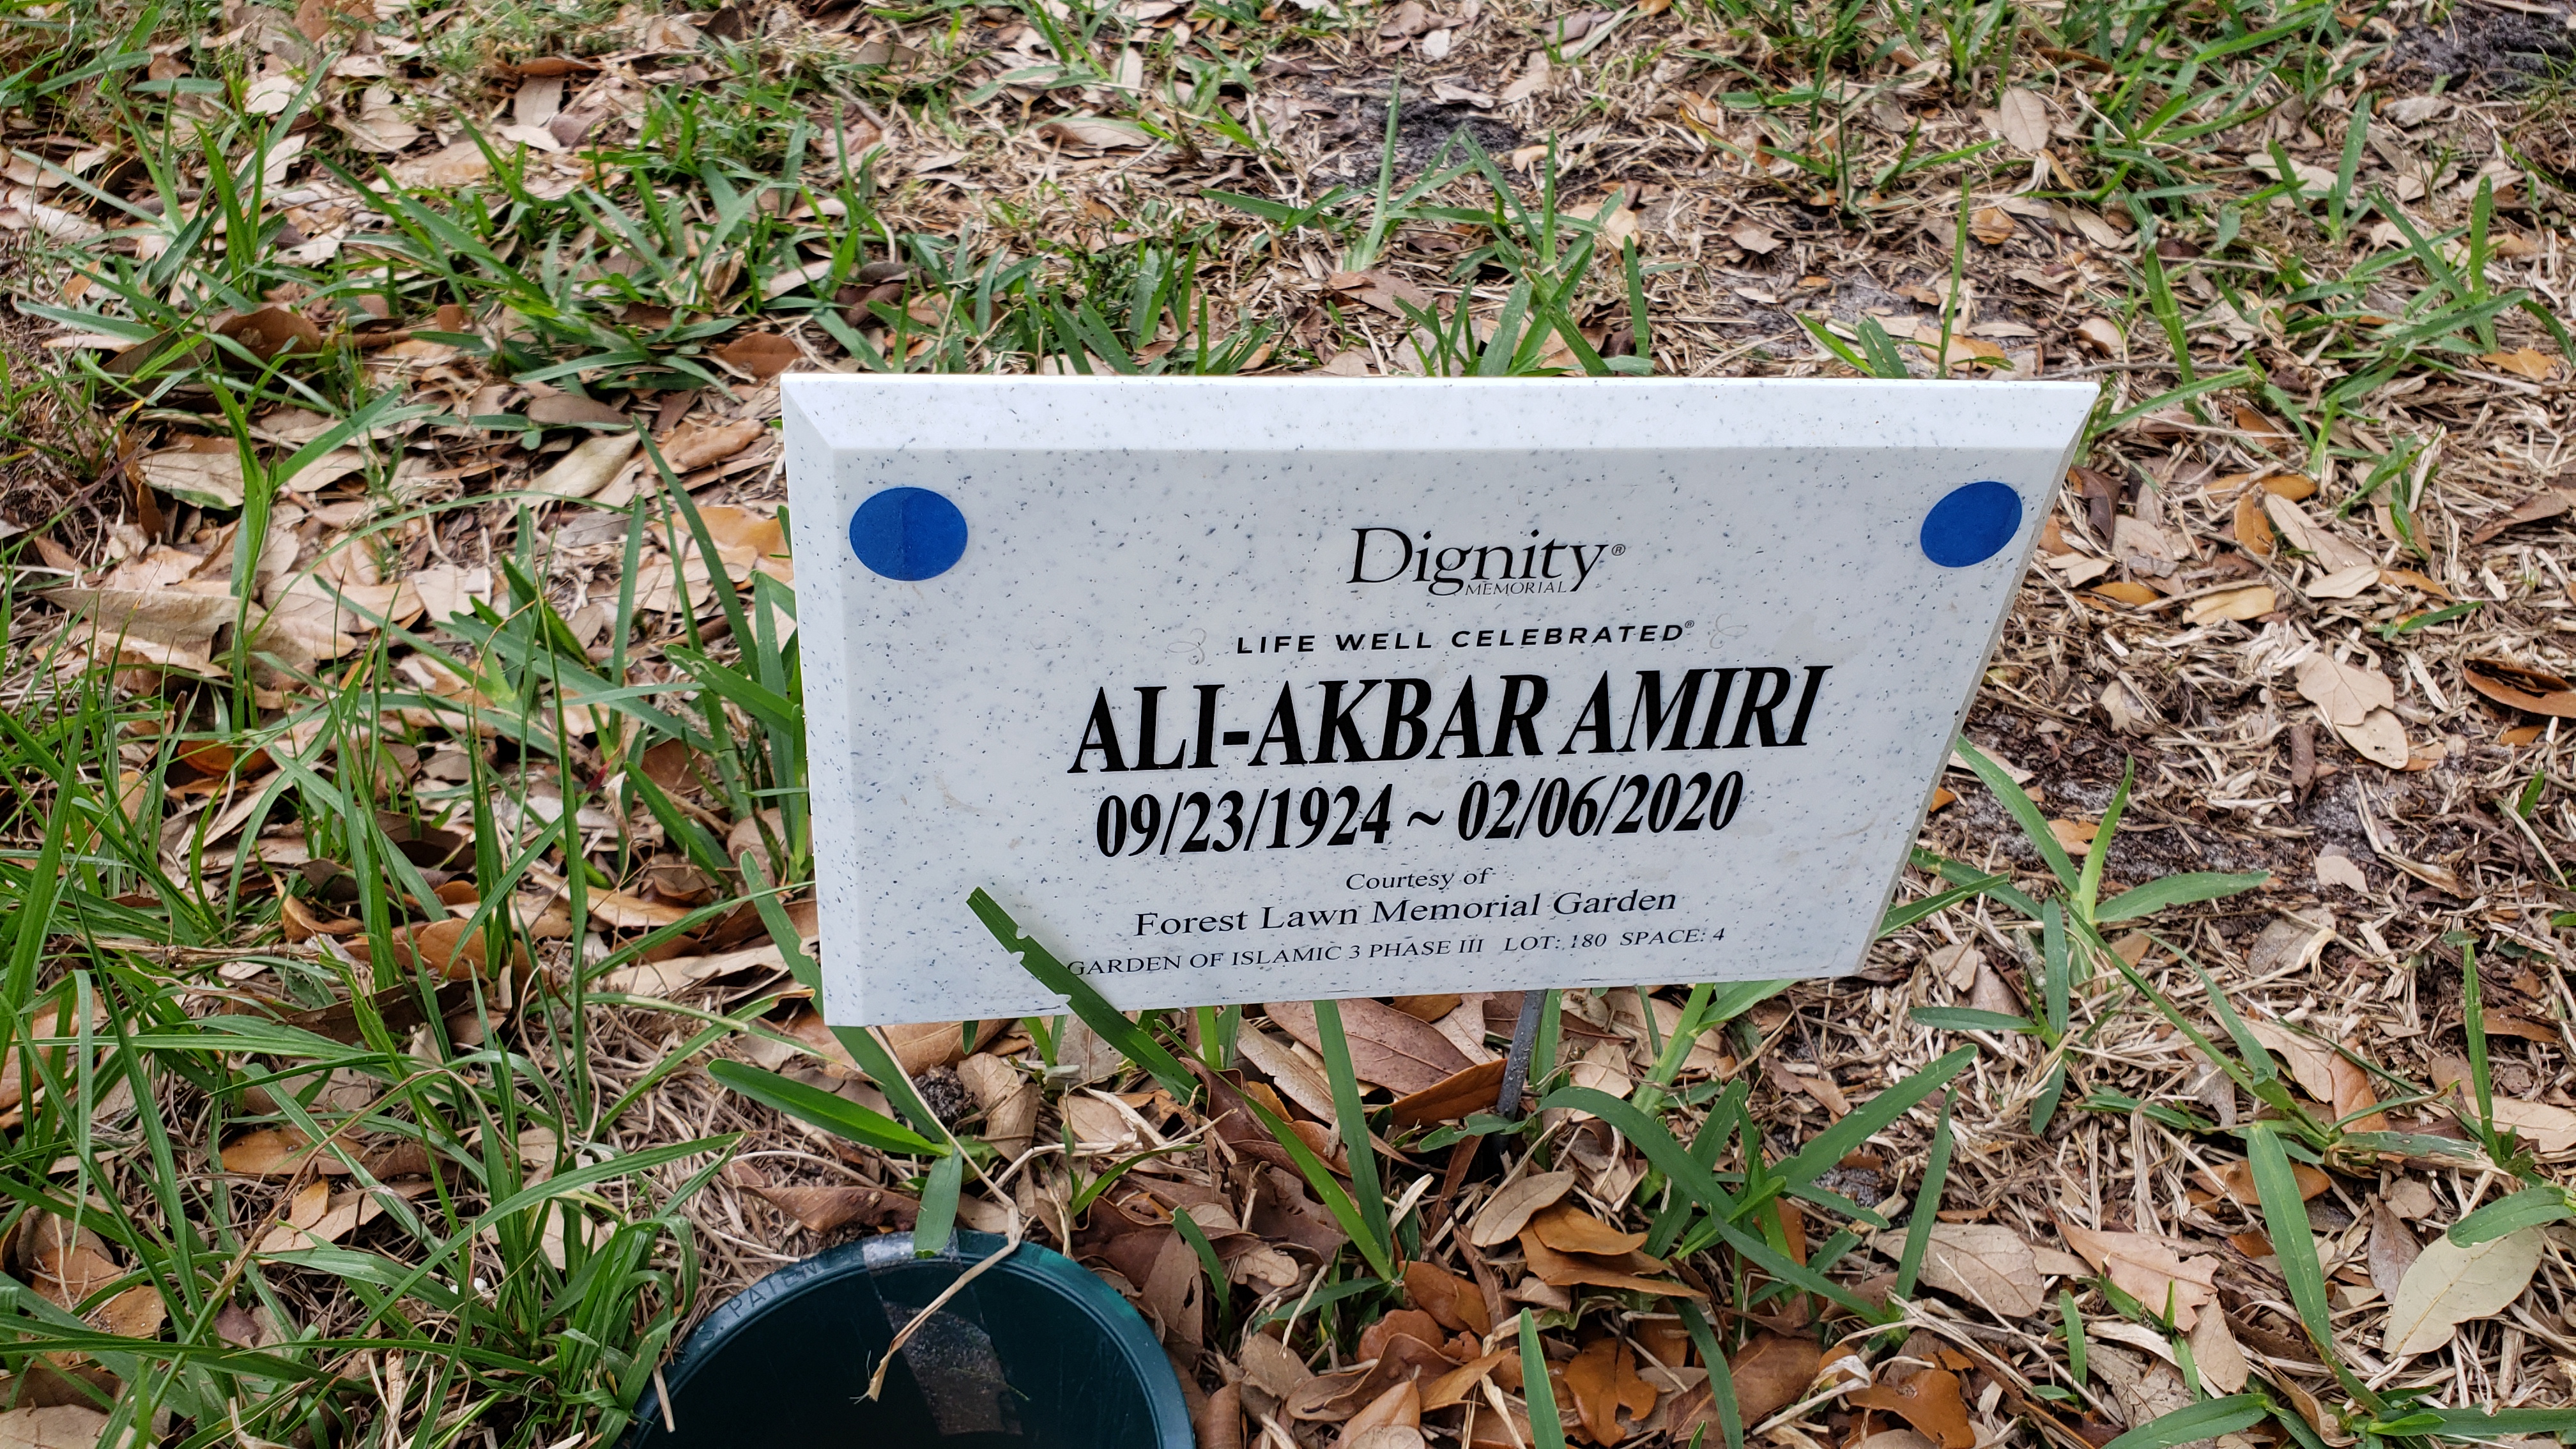 Ali-Akbar Amiri